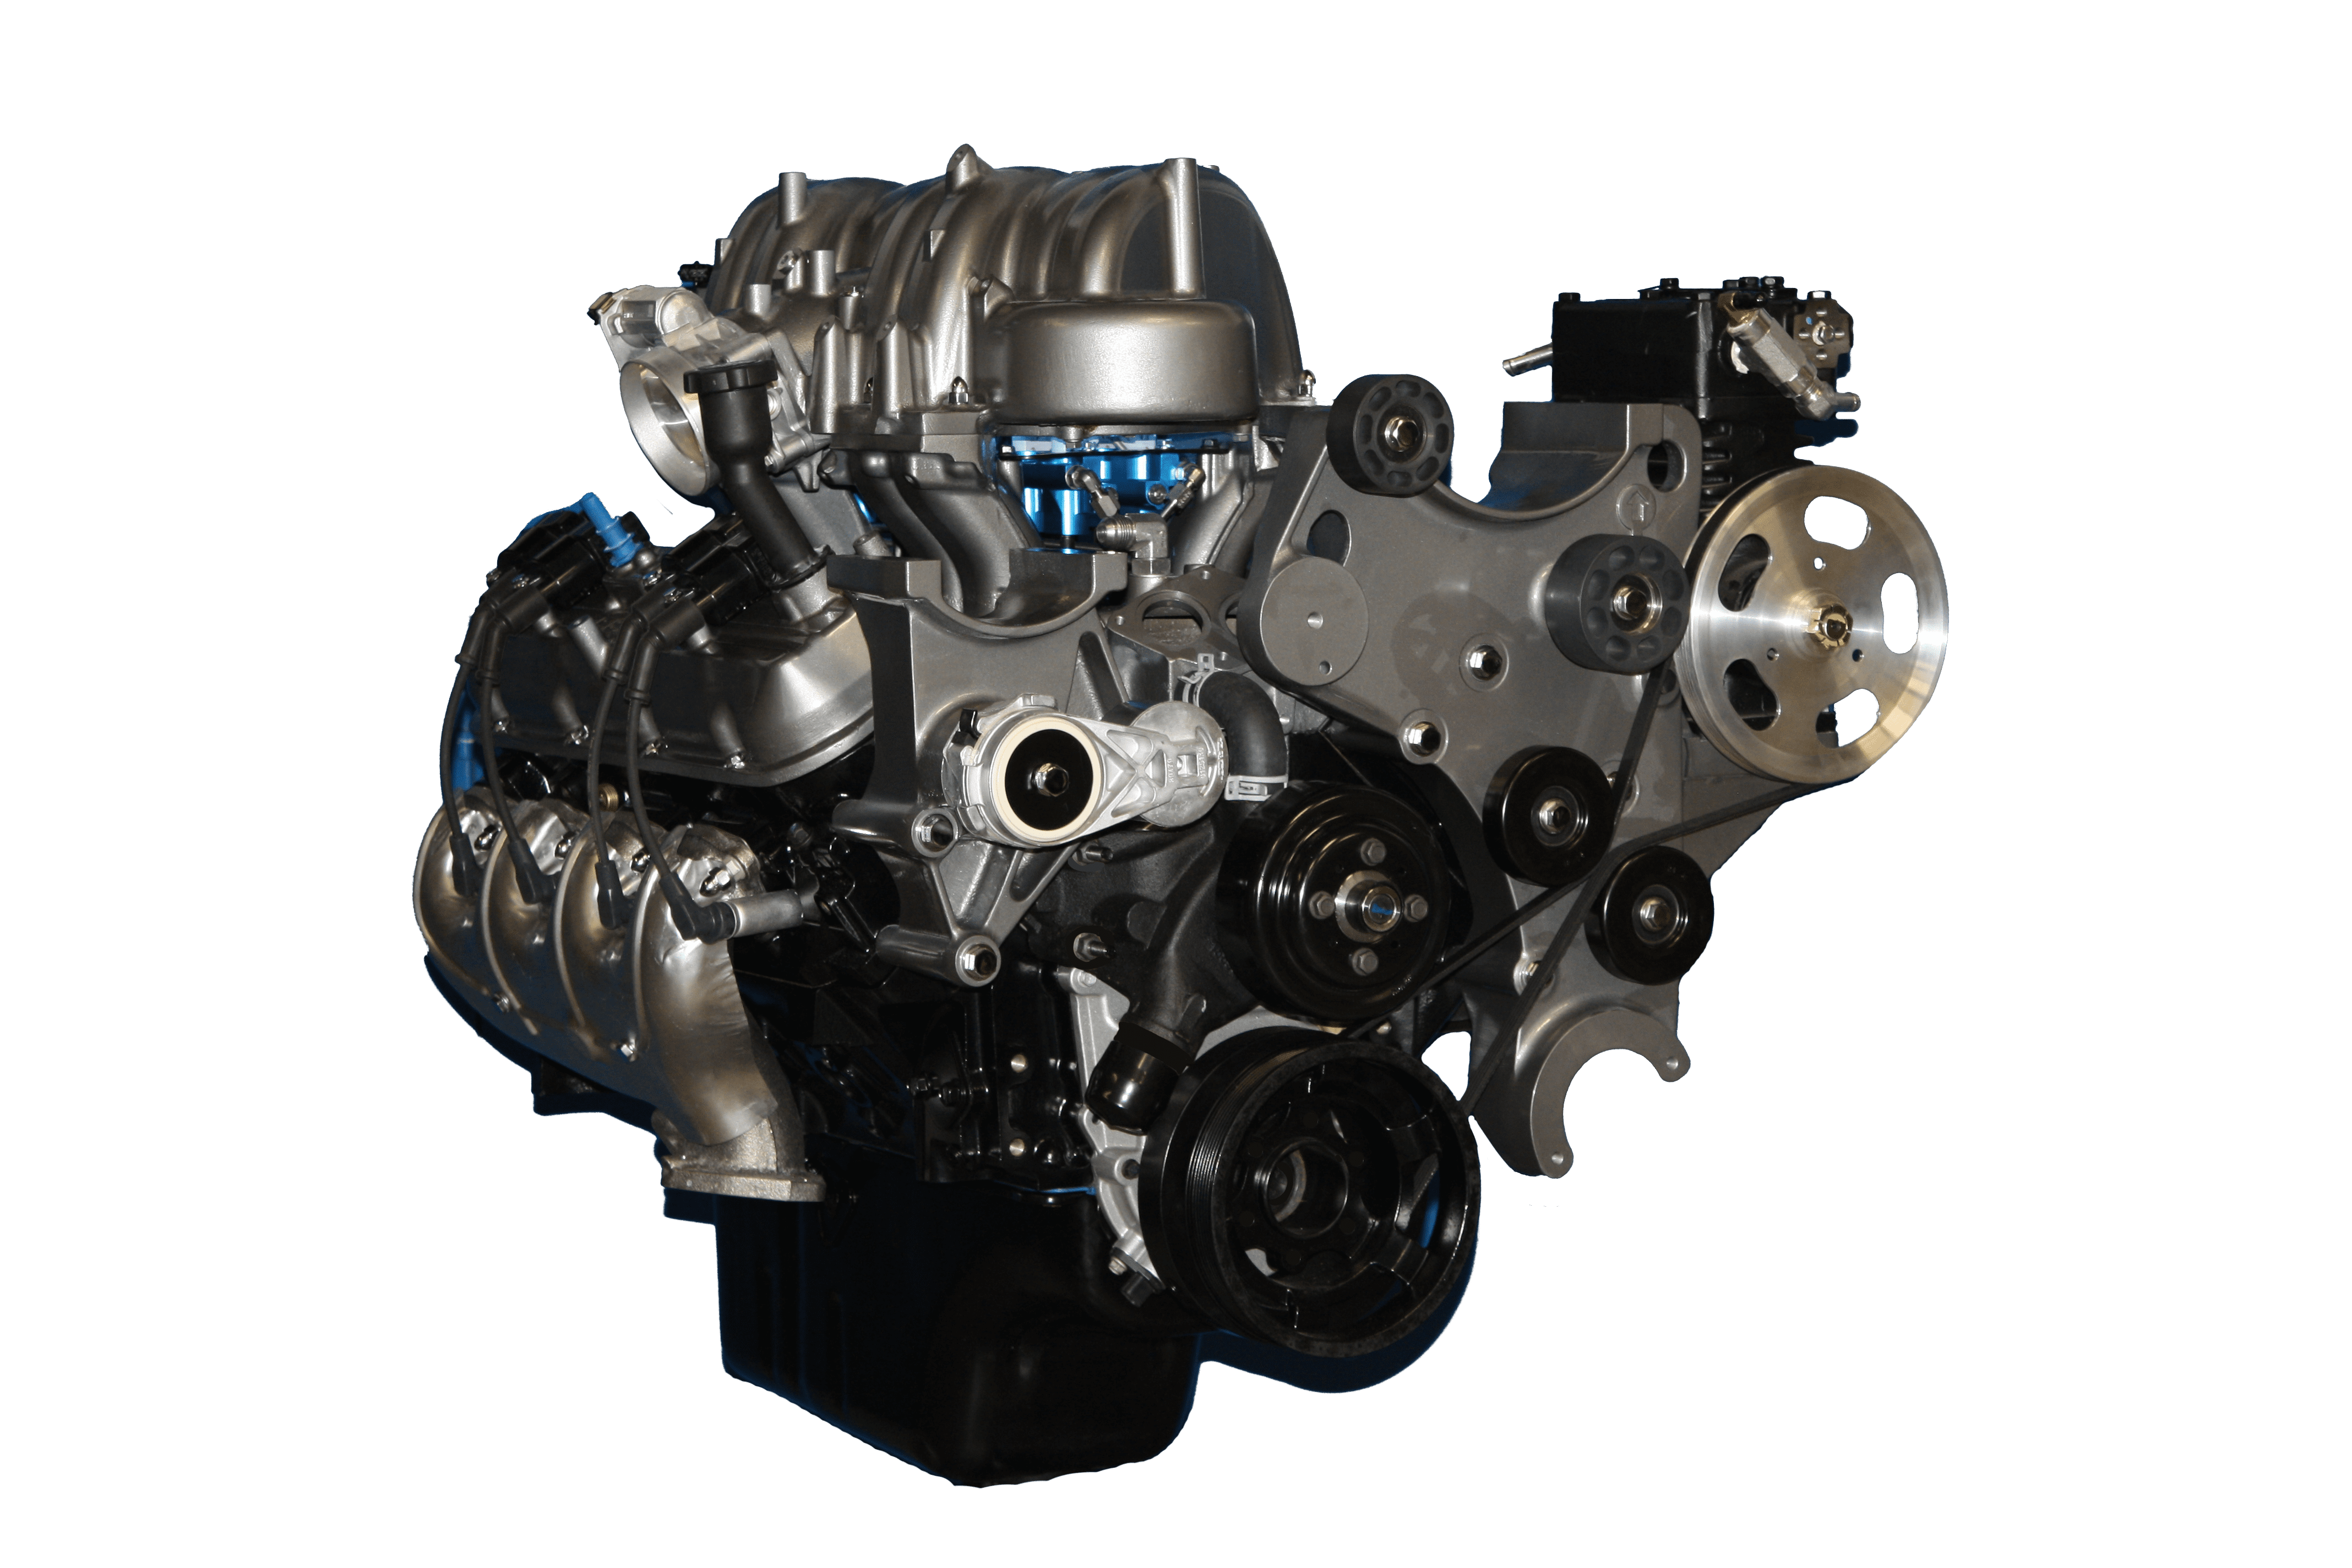 The Agility Propane Engine 488LPI